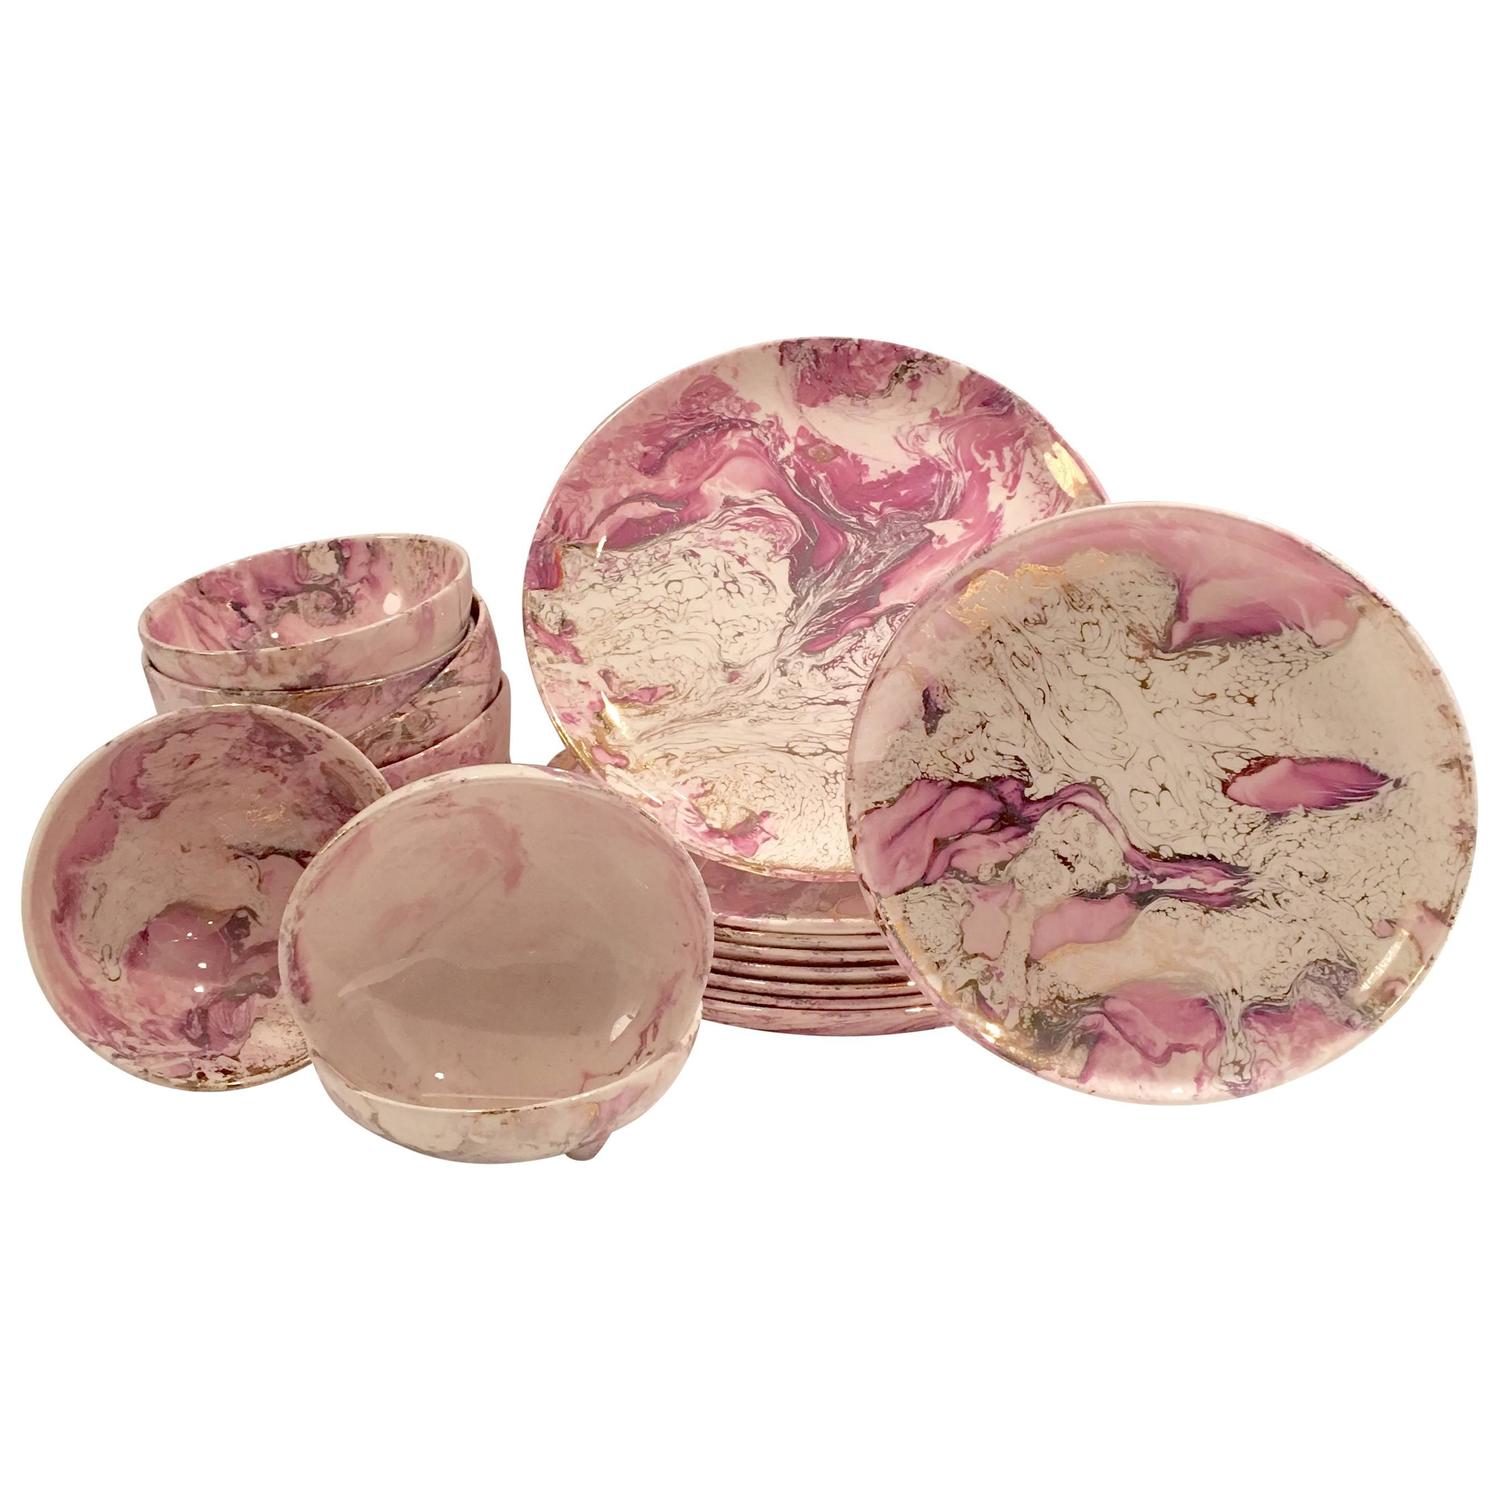 Sascha Brastoff Surf Ballet Dinnerware - Rare Pink and Platinum colorway